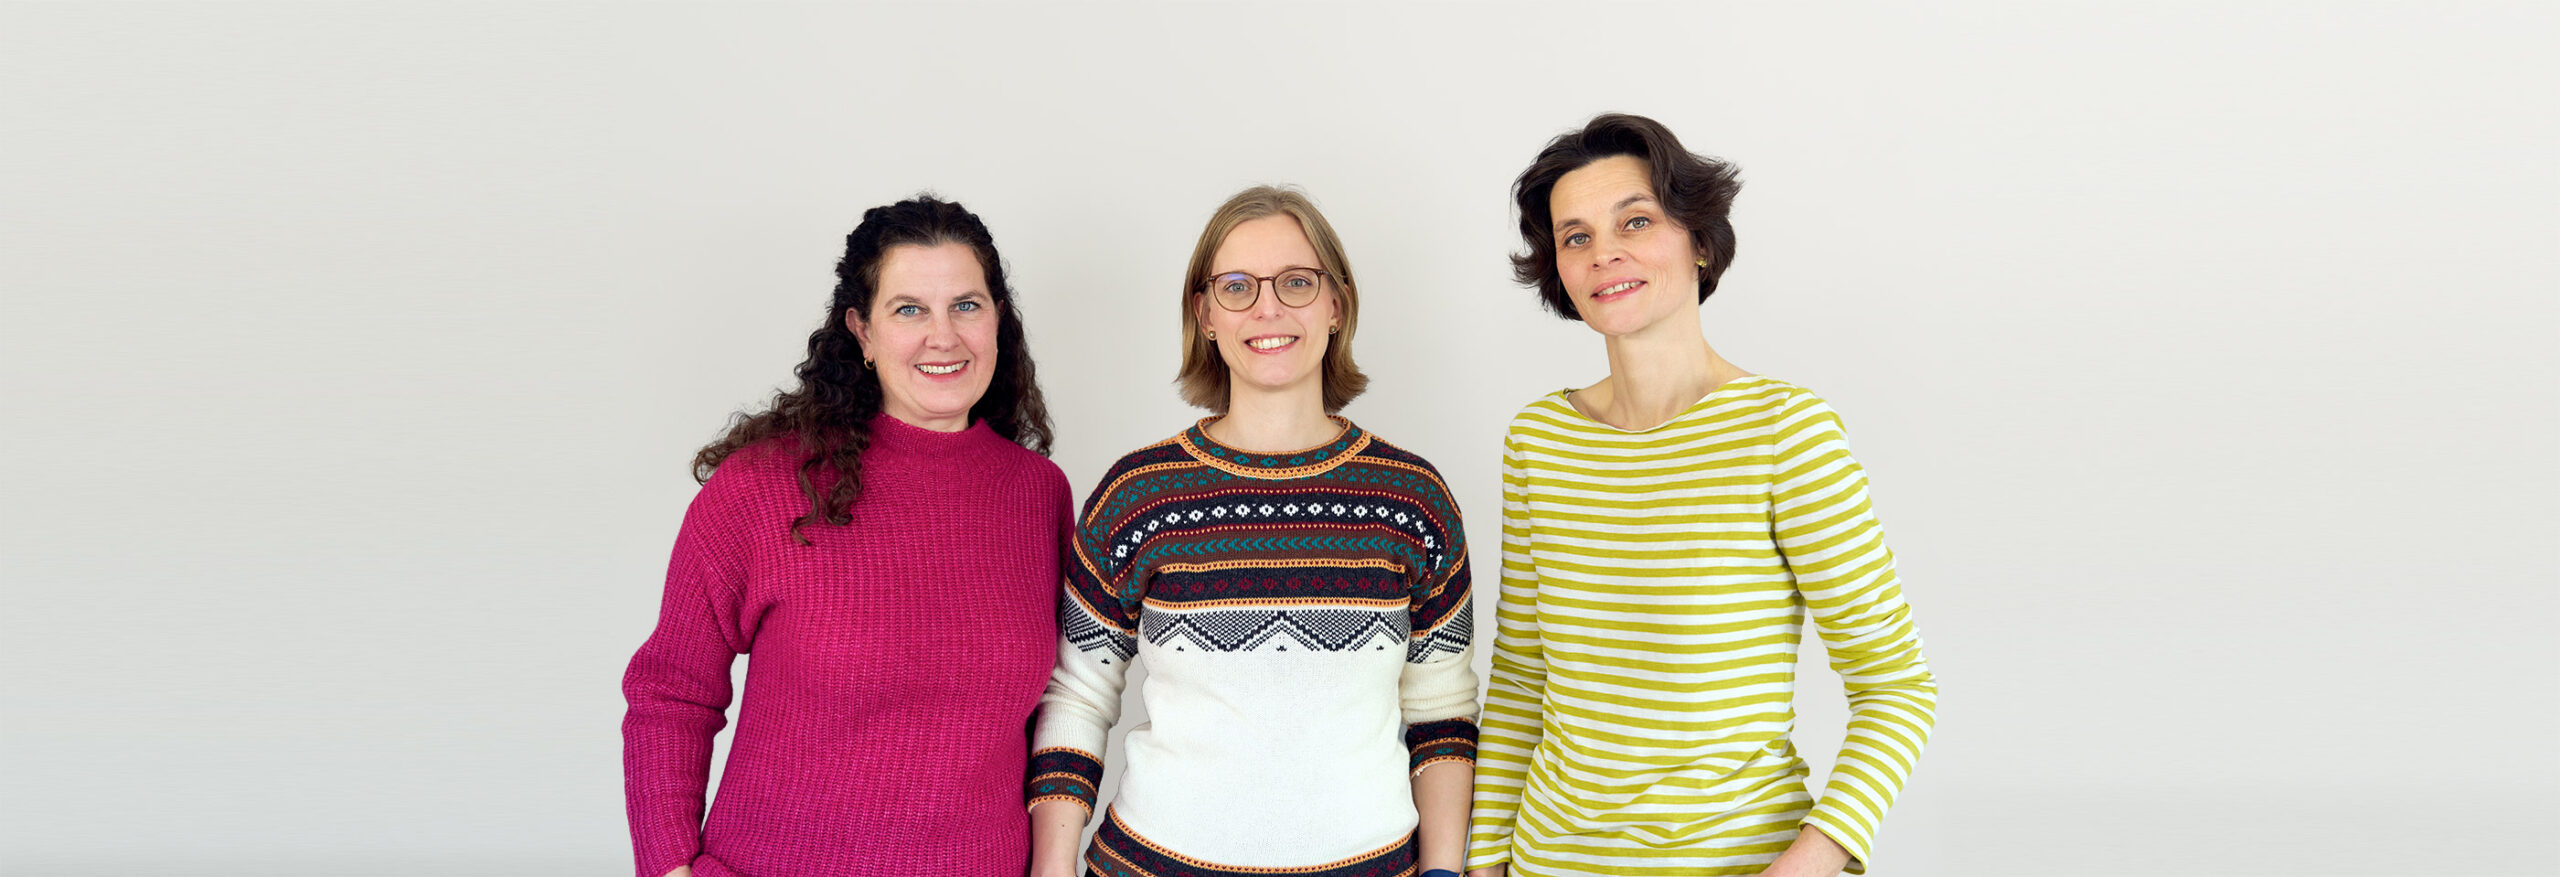 gyn+ Gruppenbild der Praxis-Inhaberinnen Daniela Gräf, Evi Lauinger-Lörsch und Dr. med. Barbeleis Zilk